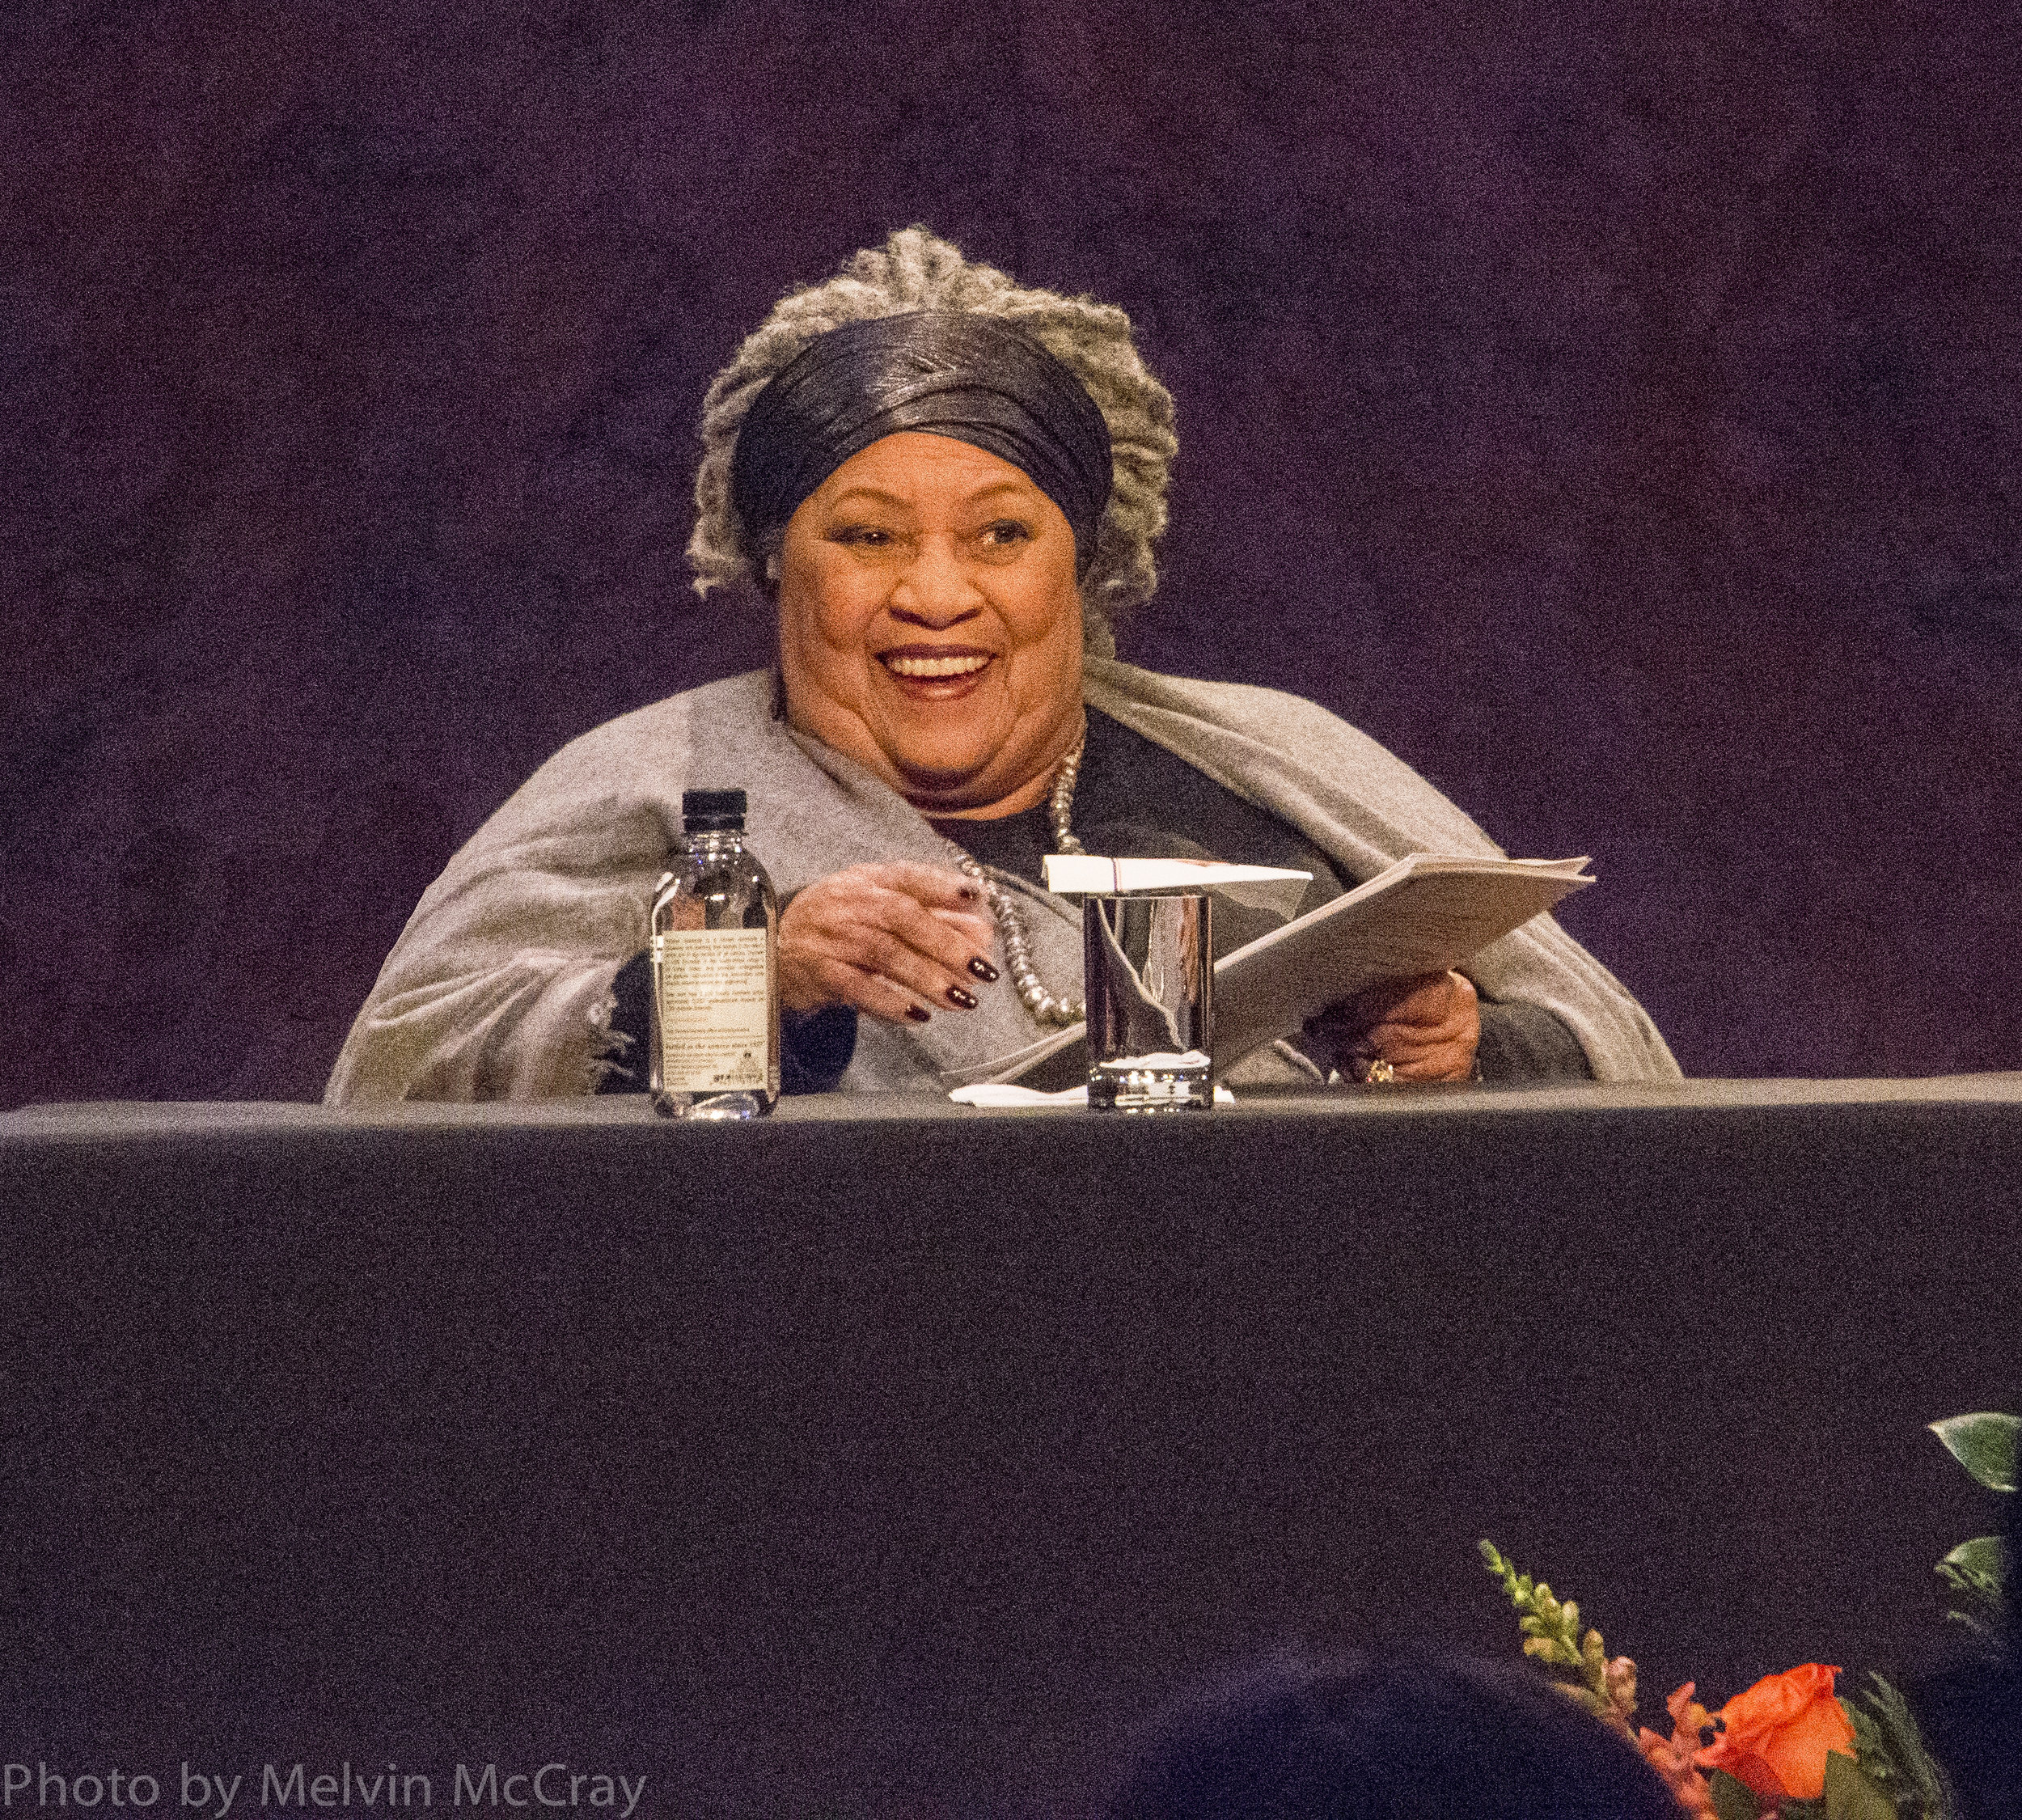 Toni Morrison Keynote 2 photo by Melvin McCray.jpg